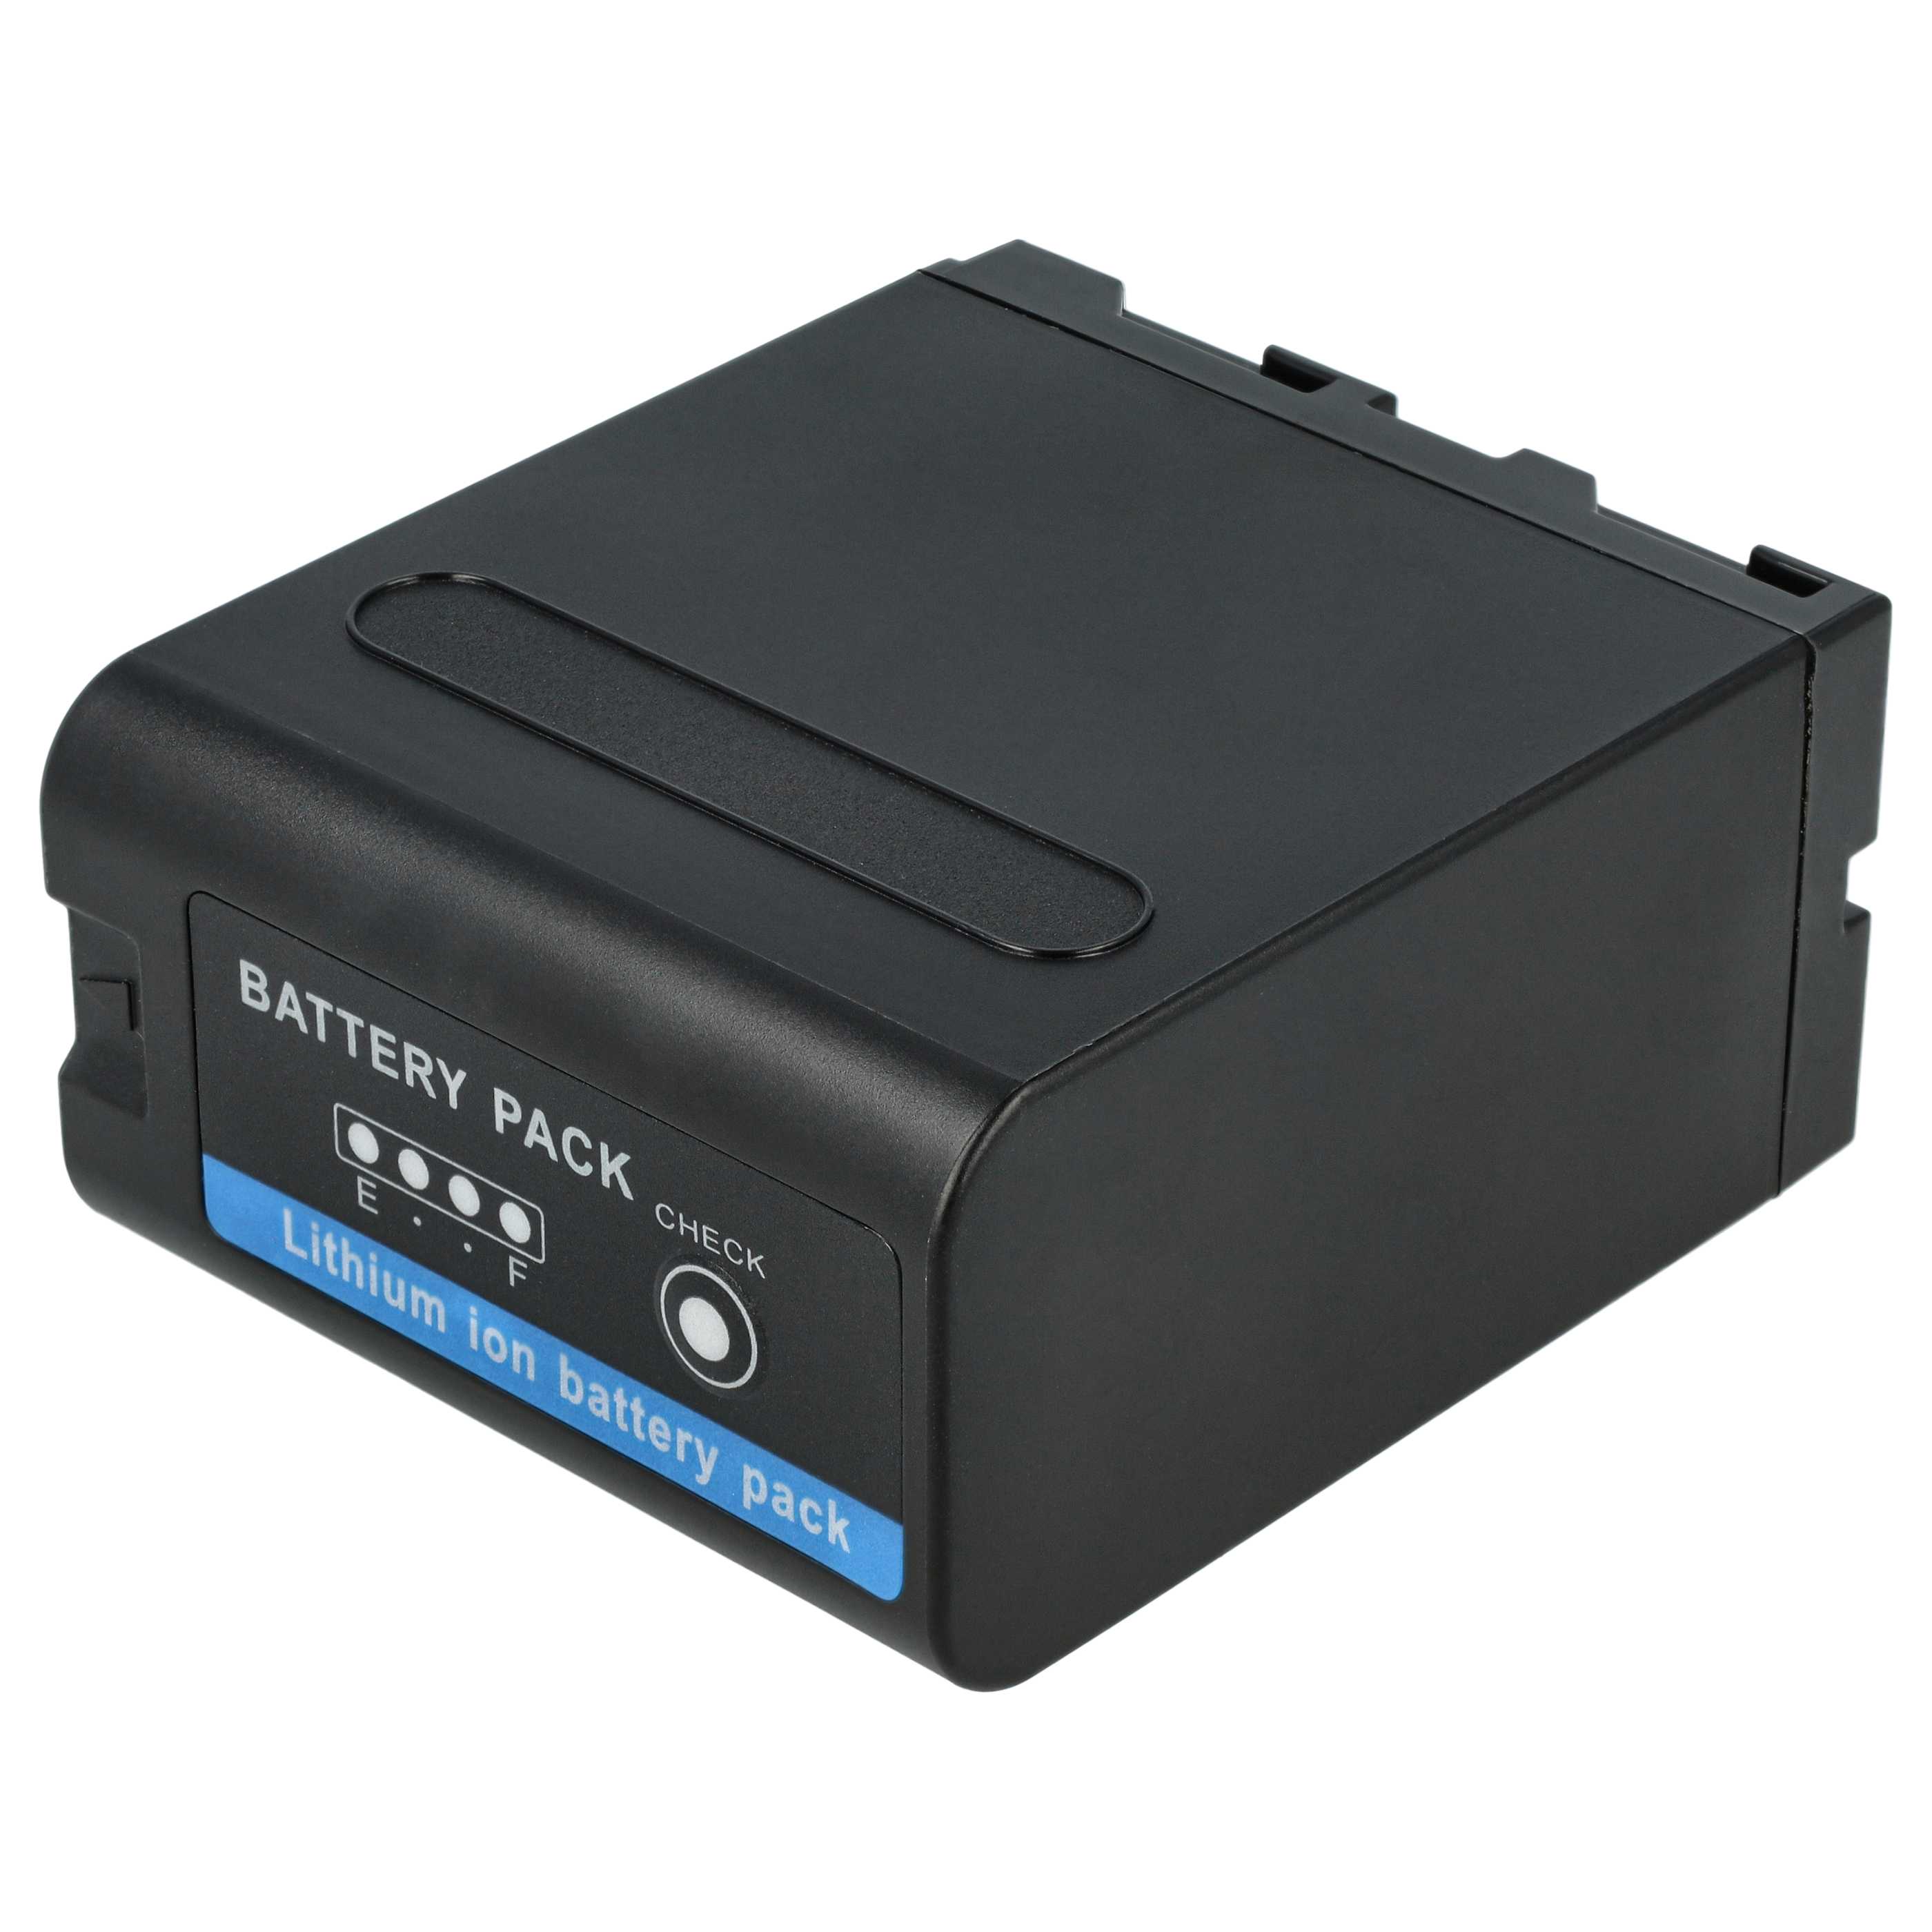 3x Akumulator do kamery cyfrowej / wideo zamiennik Sony NP-F930, NP-F960, NP-F950 - 10400 mAh 7,4 V Li-Ion